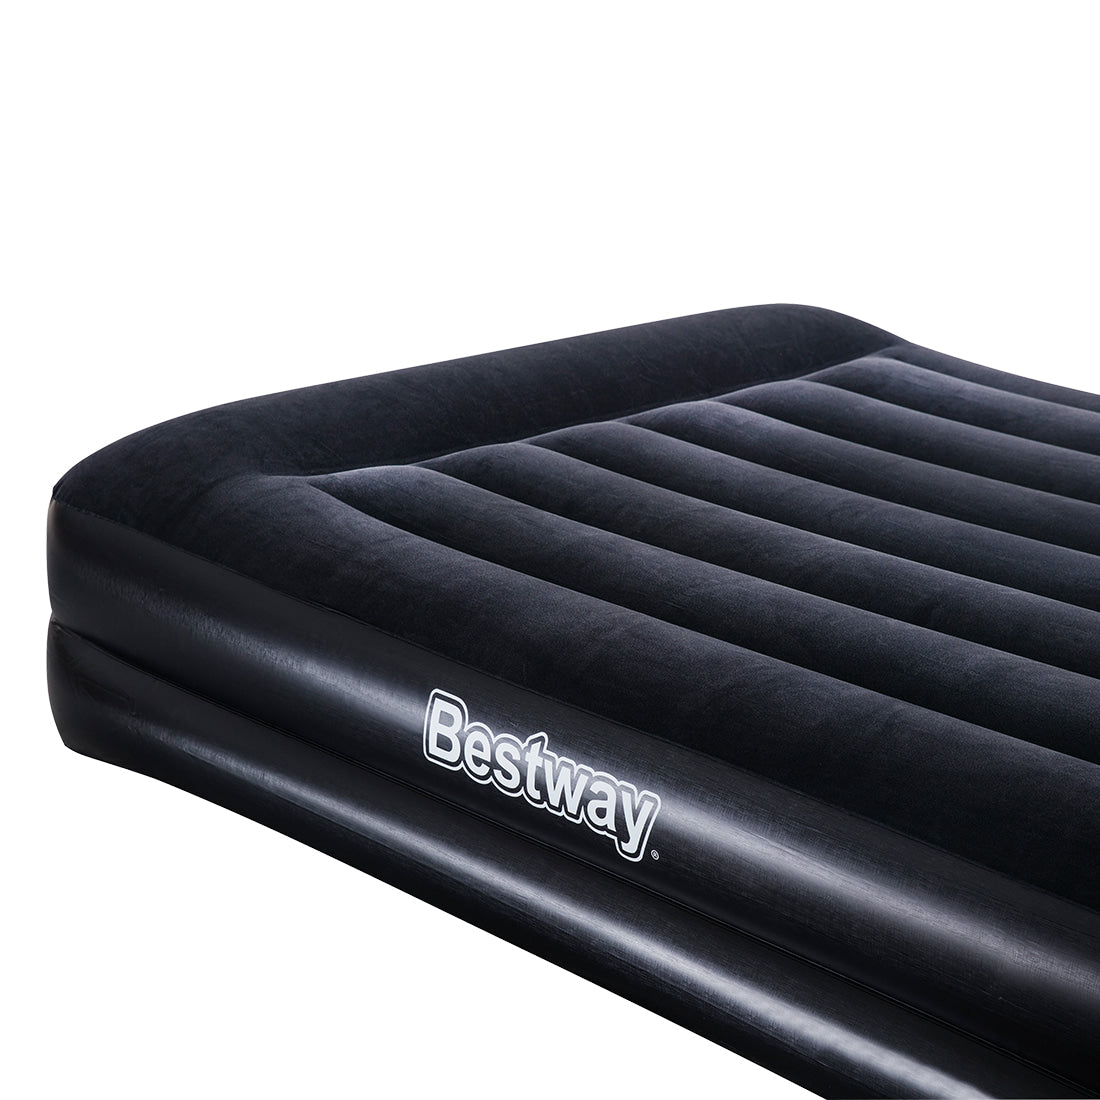 Bestway Tritech Premium Queen Air Bed with Built-in AC Pump